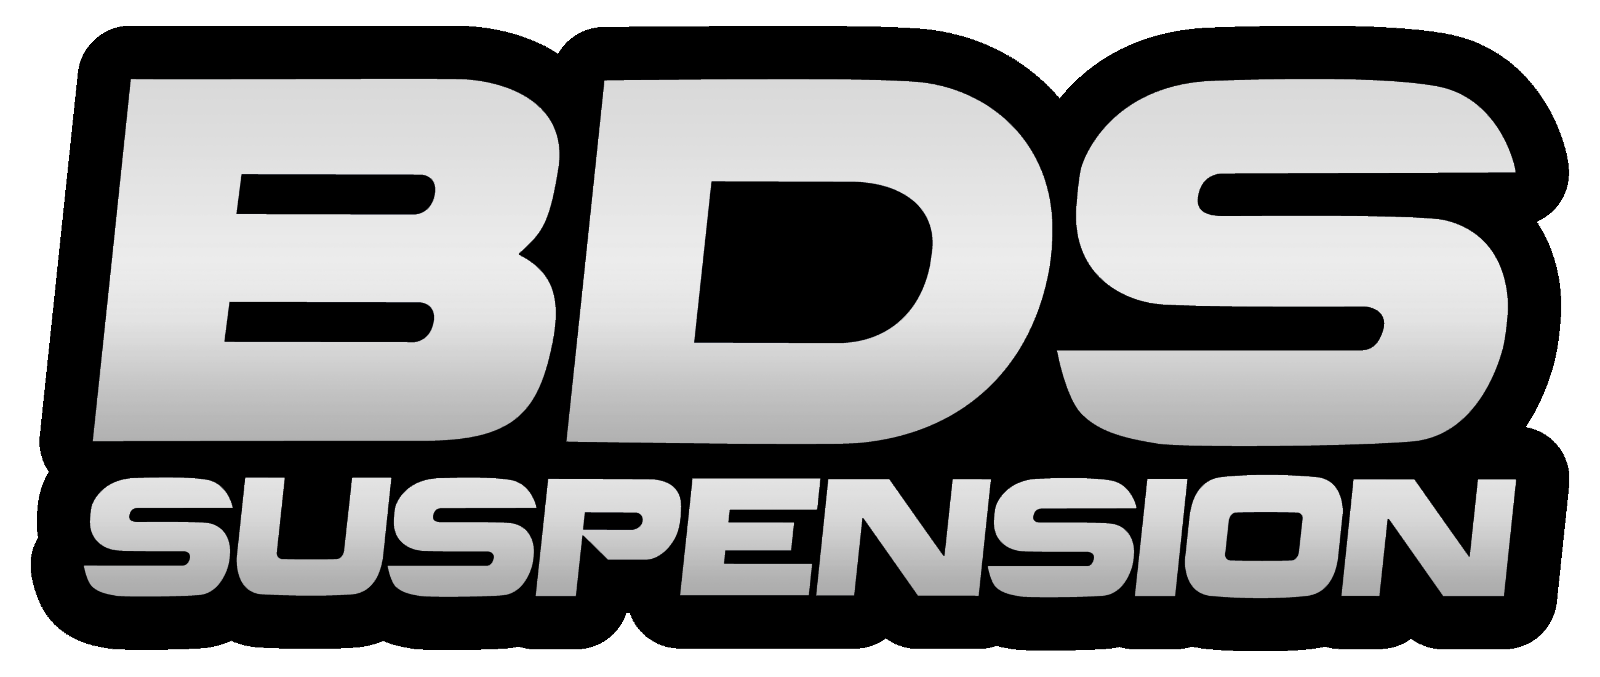 BDS BDS196FS 6.5 Inch Lift Kit Chevy Silverado or GMC Sierra 2500HD/3500 (11-19) 2/4WD